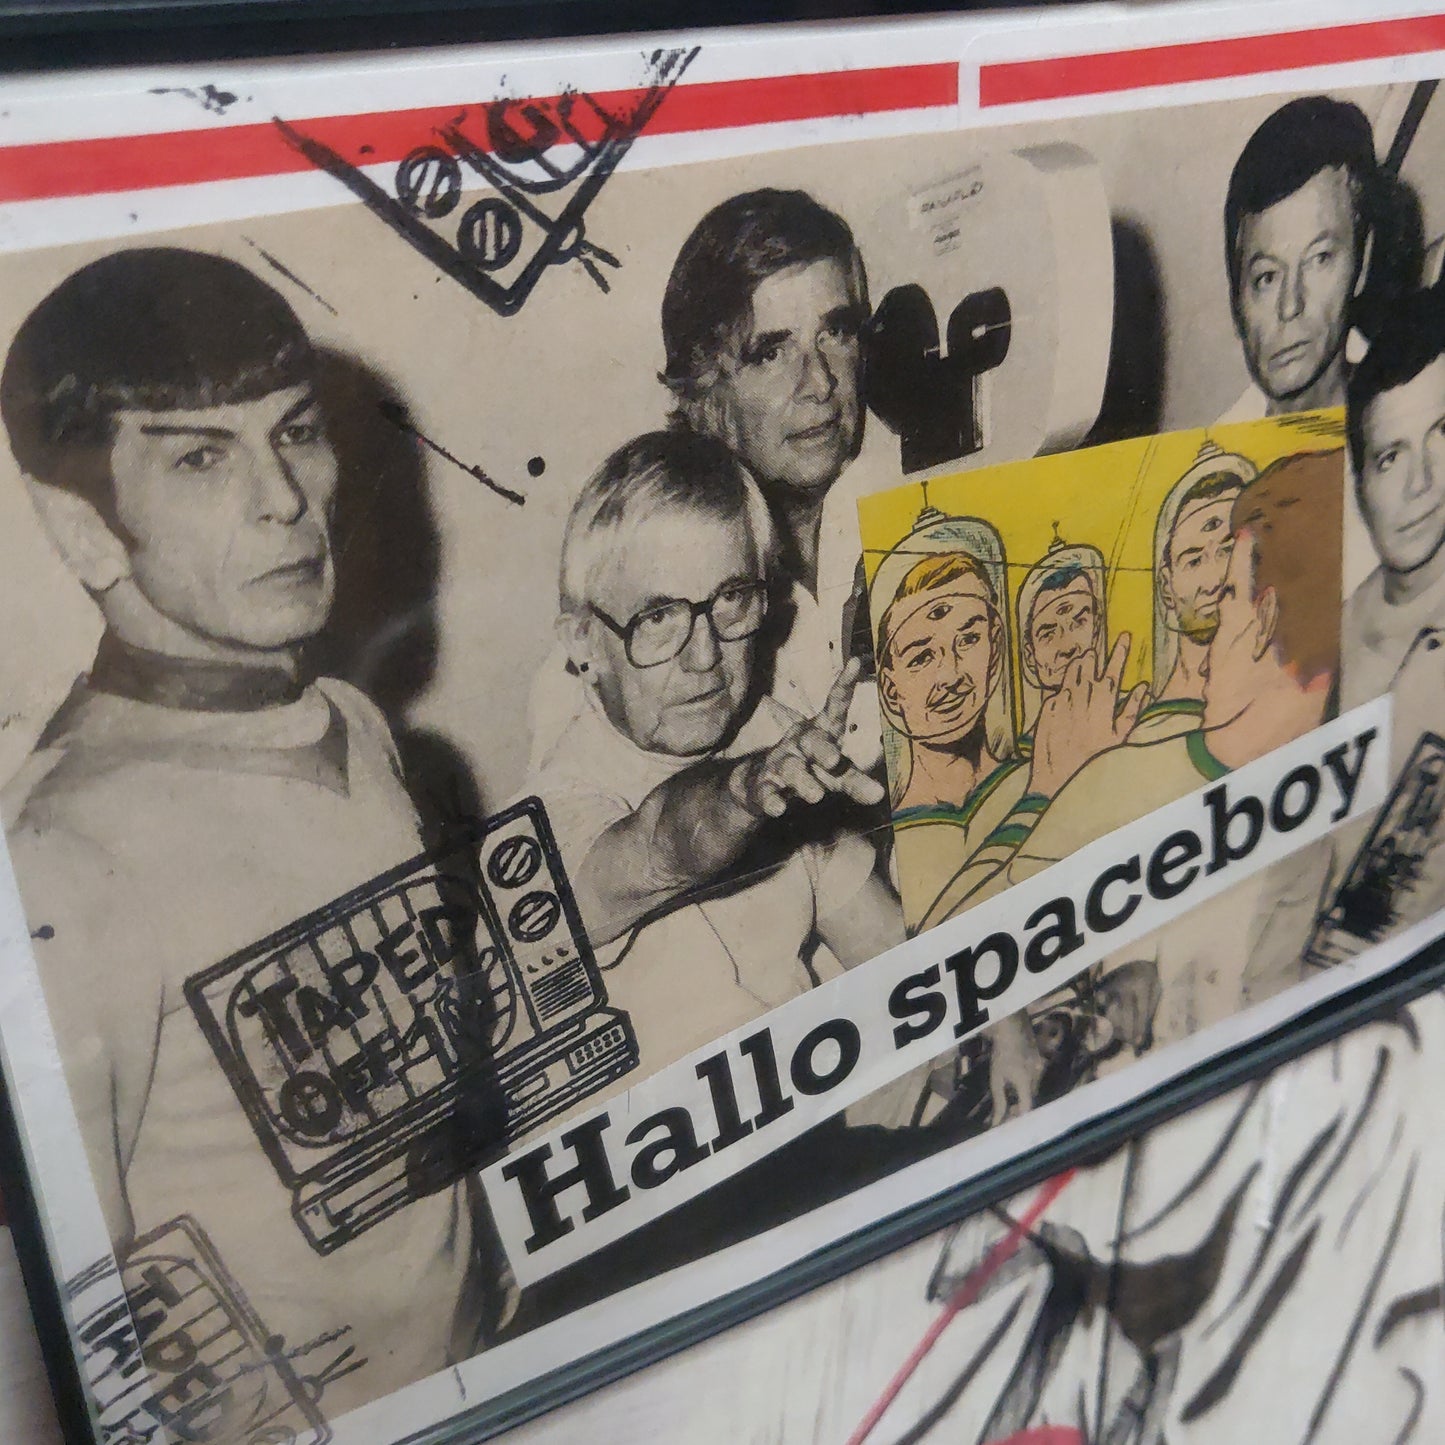 Hallo Spaceboy Framed Collage 228 @TapedOffTV